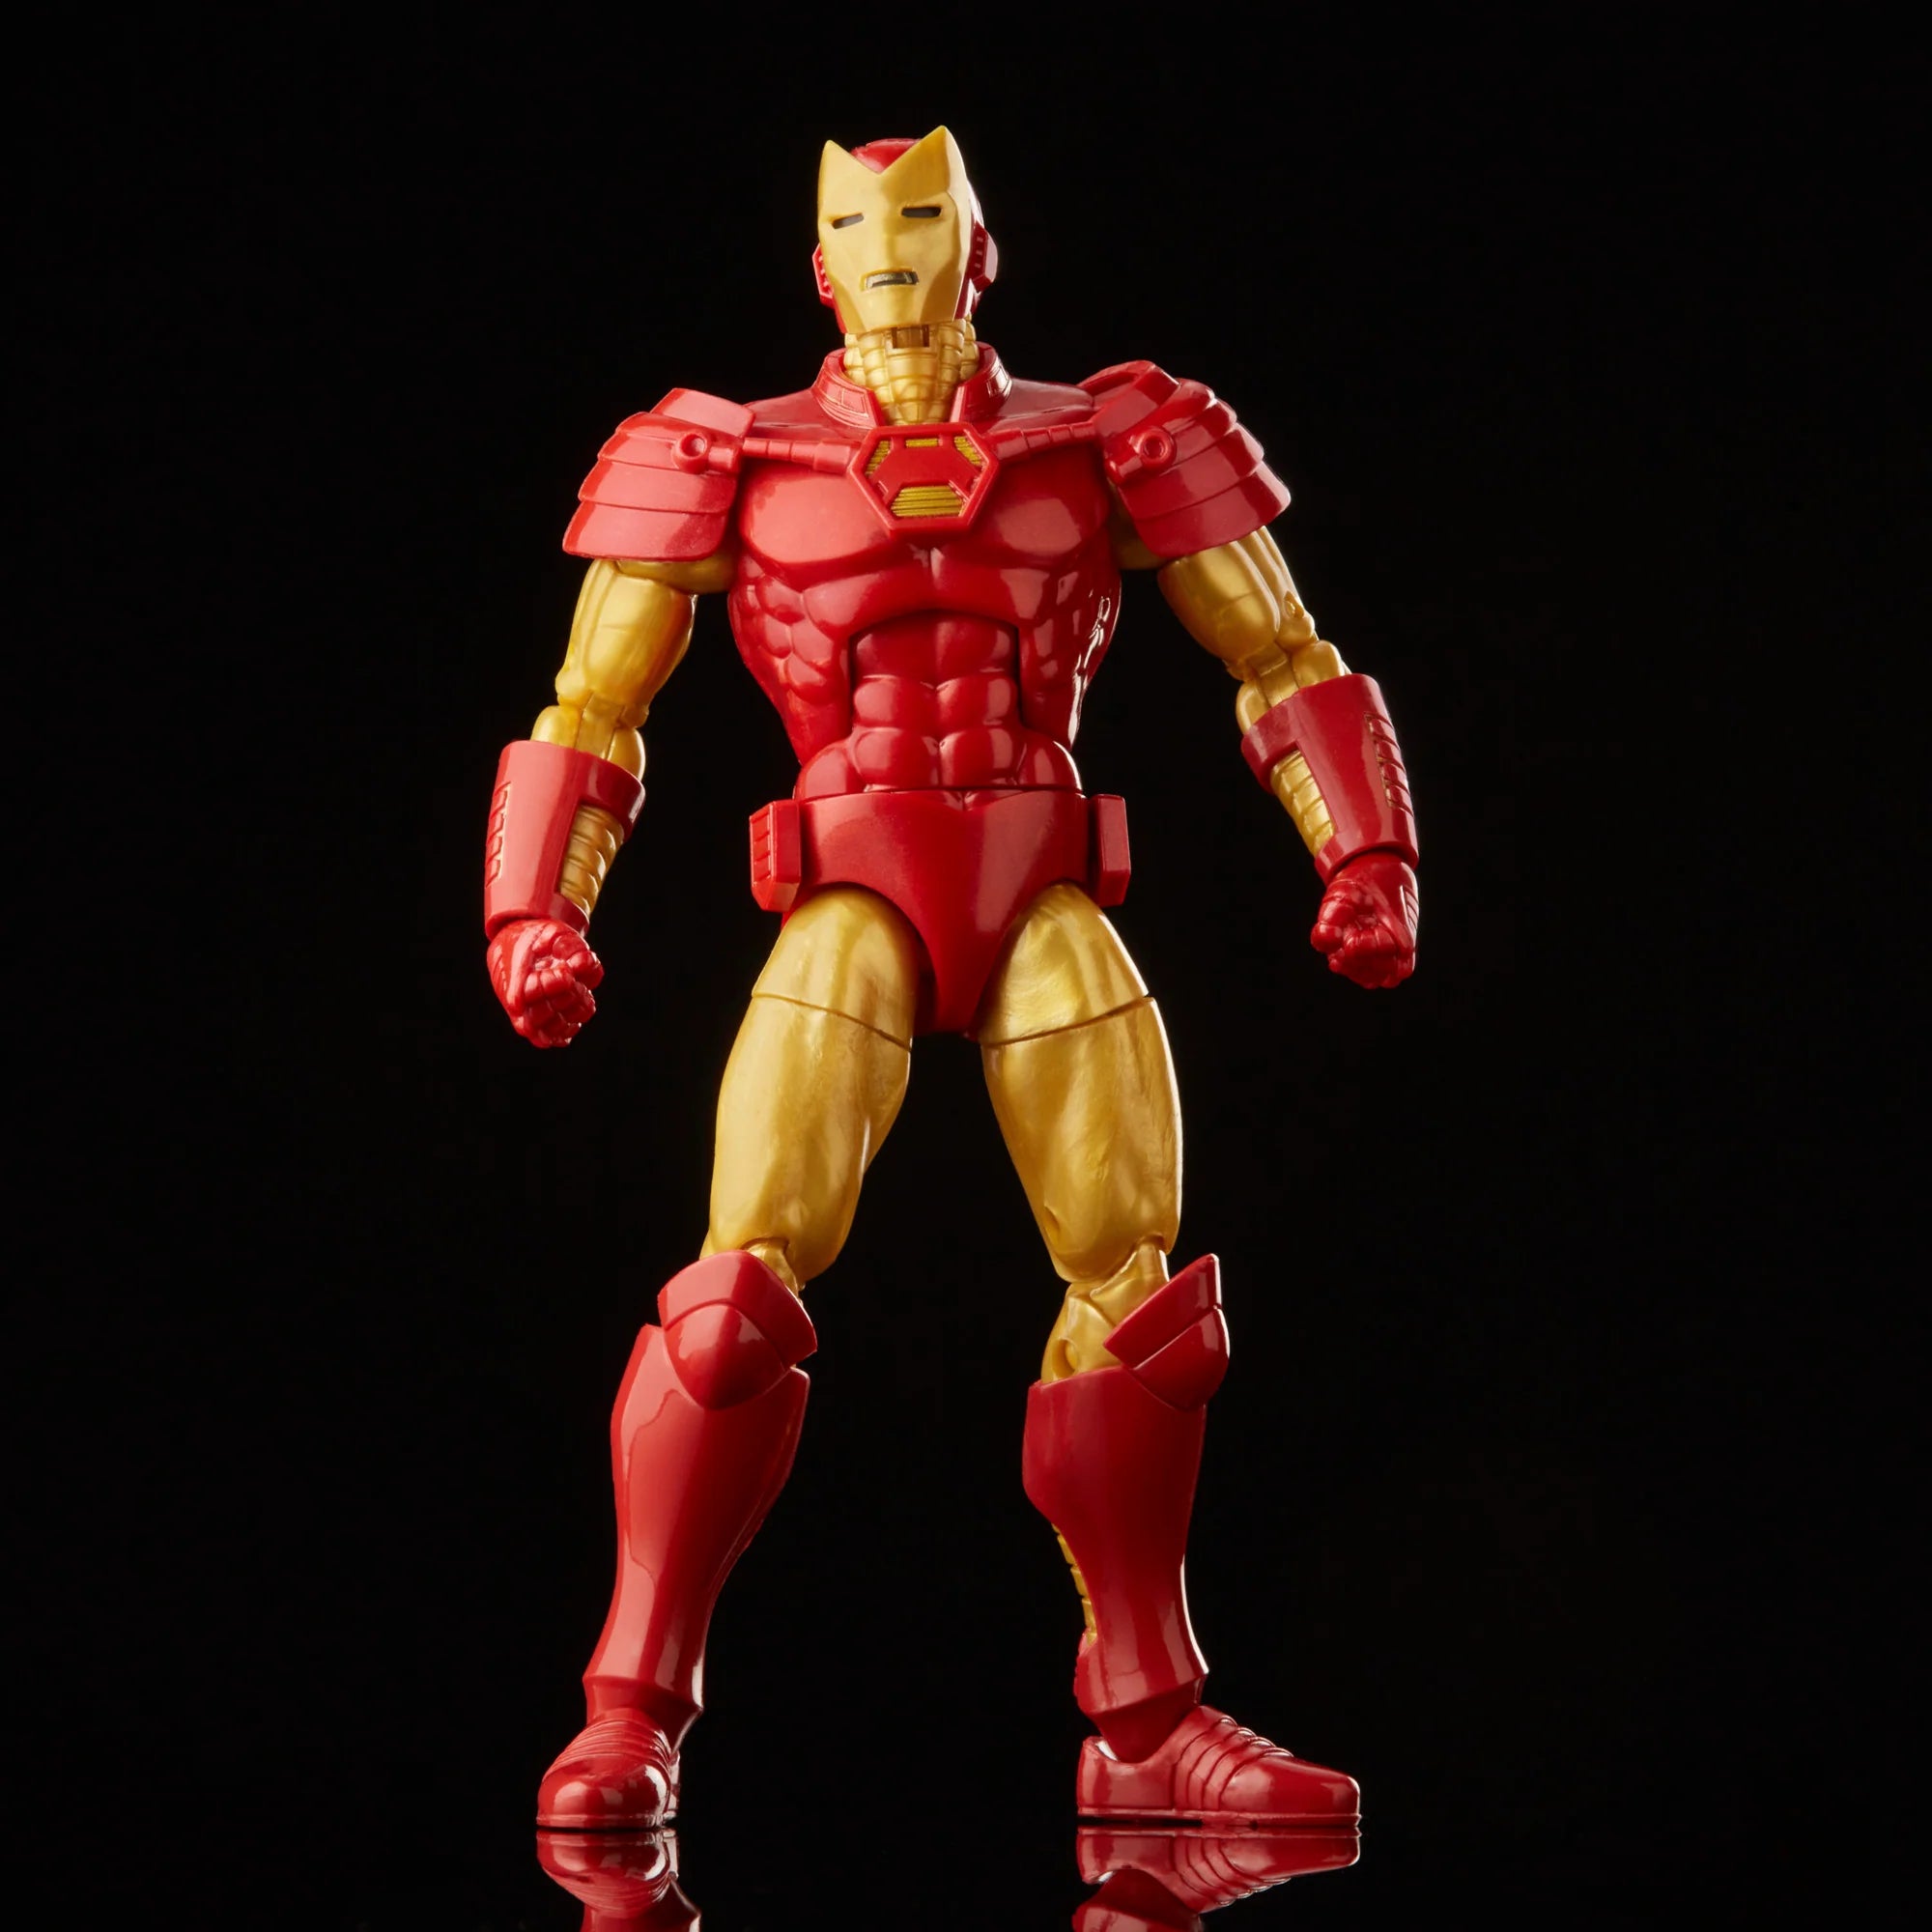 Marvel Legends Baf Totally Awesome Hulk: Marvel Comics - Iron Man Heroes Return